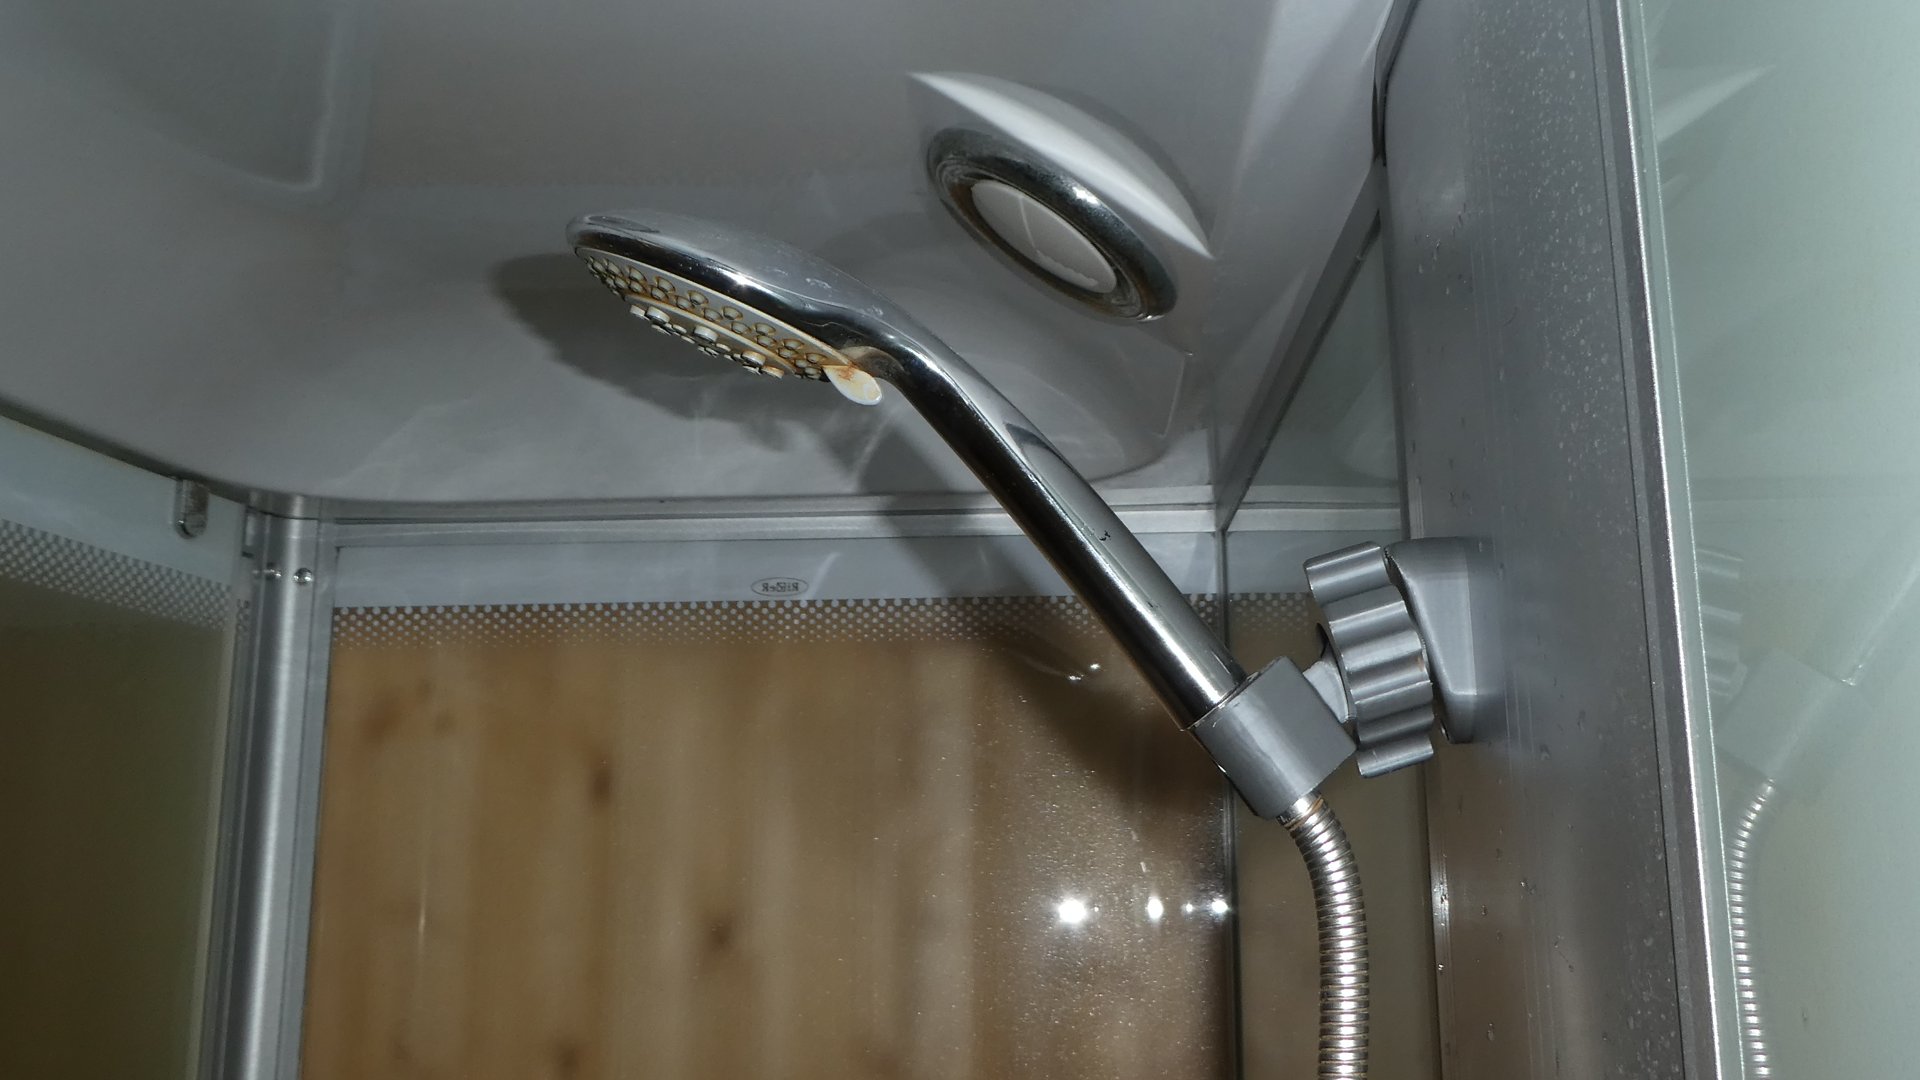 Shower holder (adjustable to any direction)